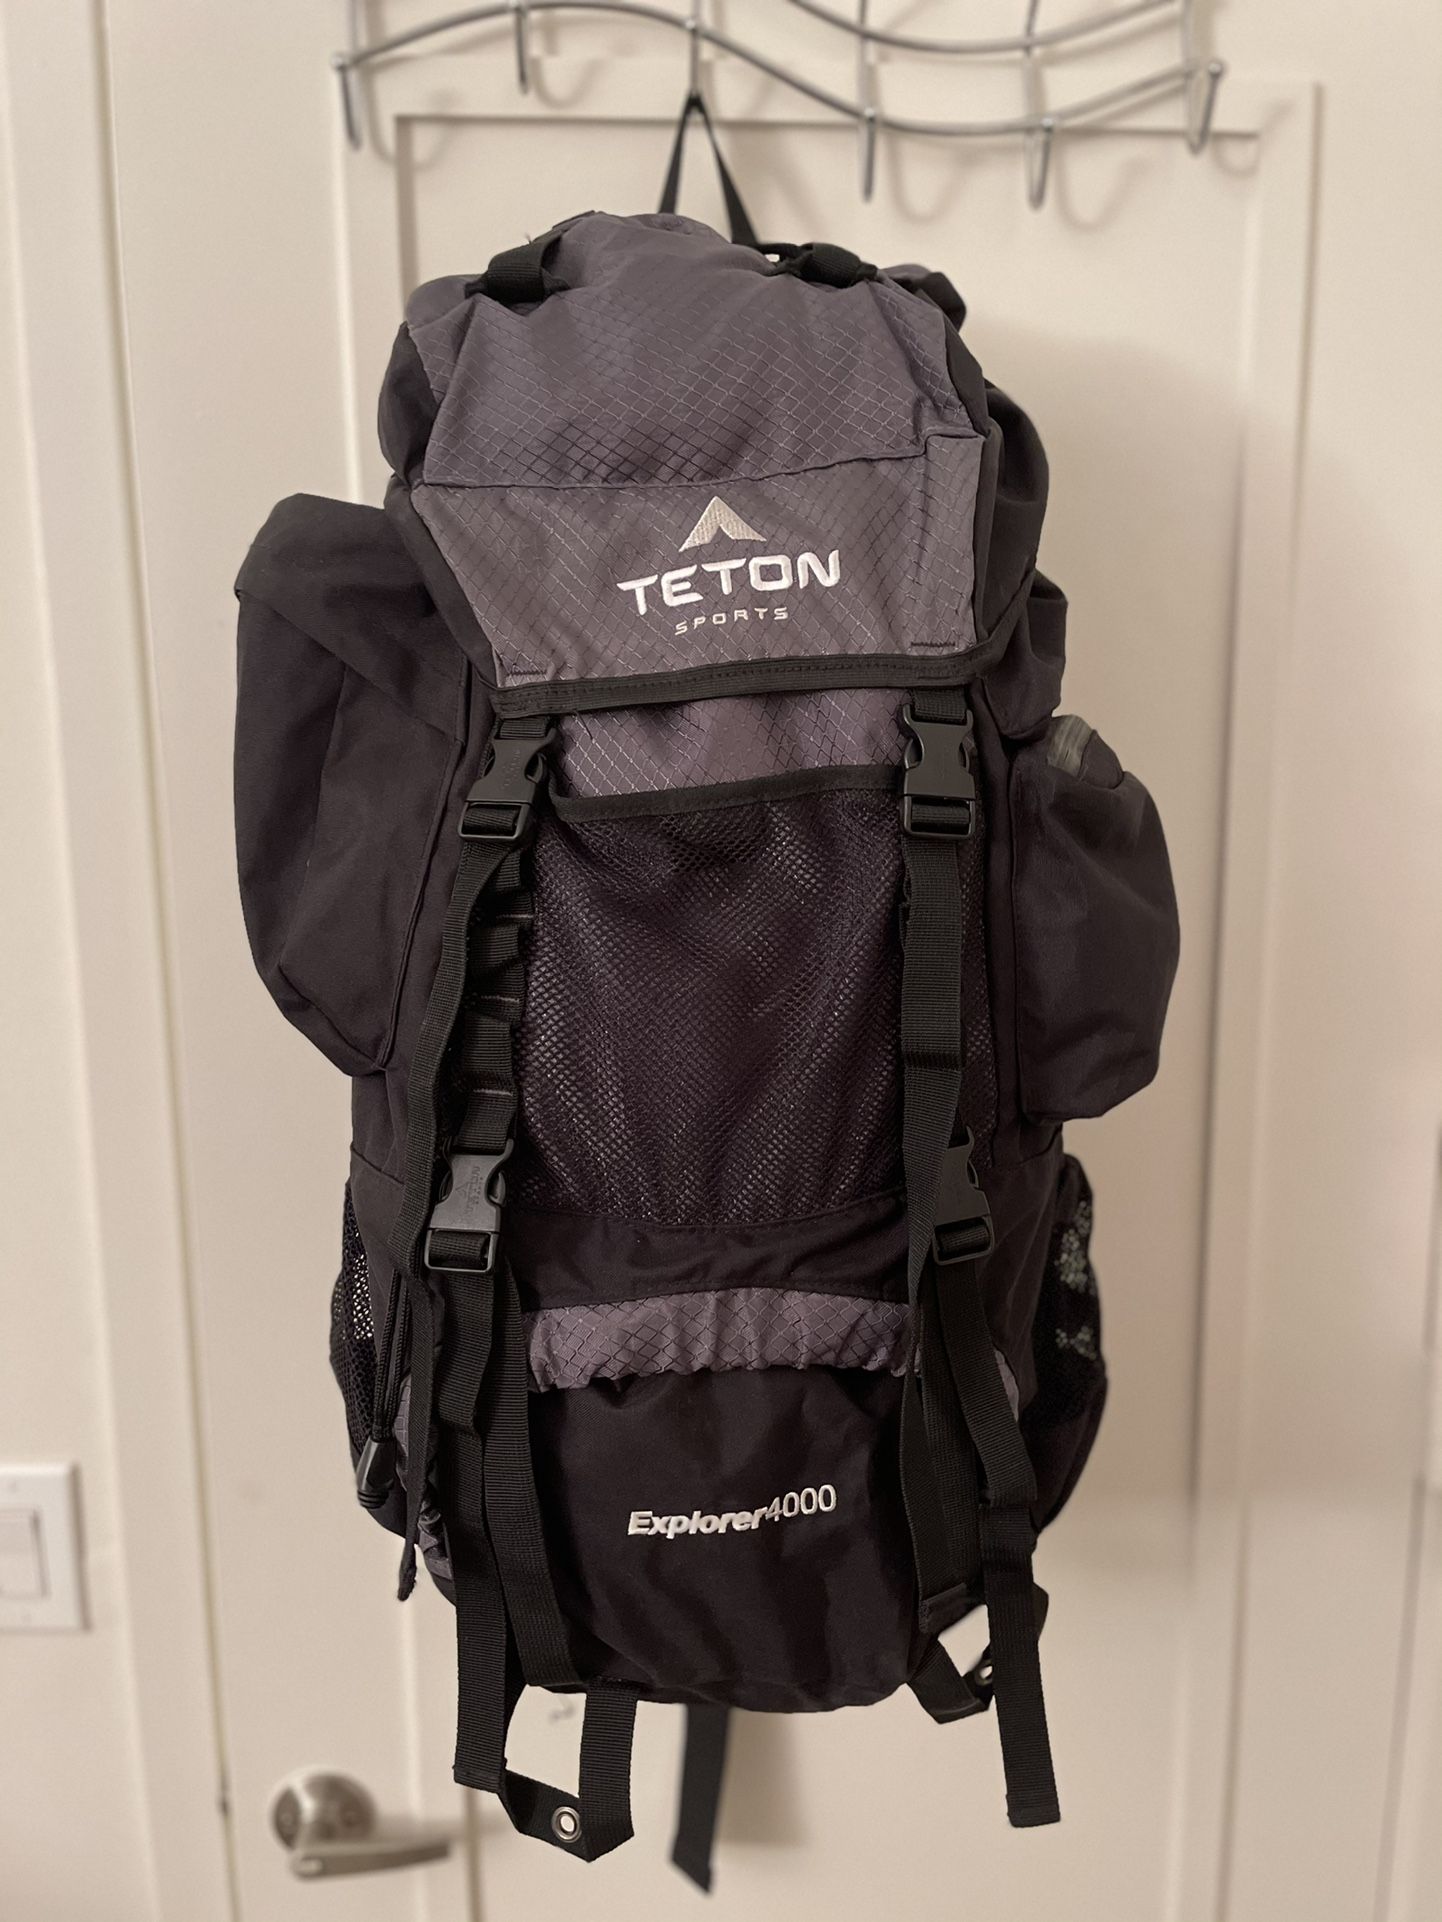 TETON Sports Explorer 4000 Internal backpack